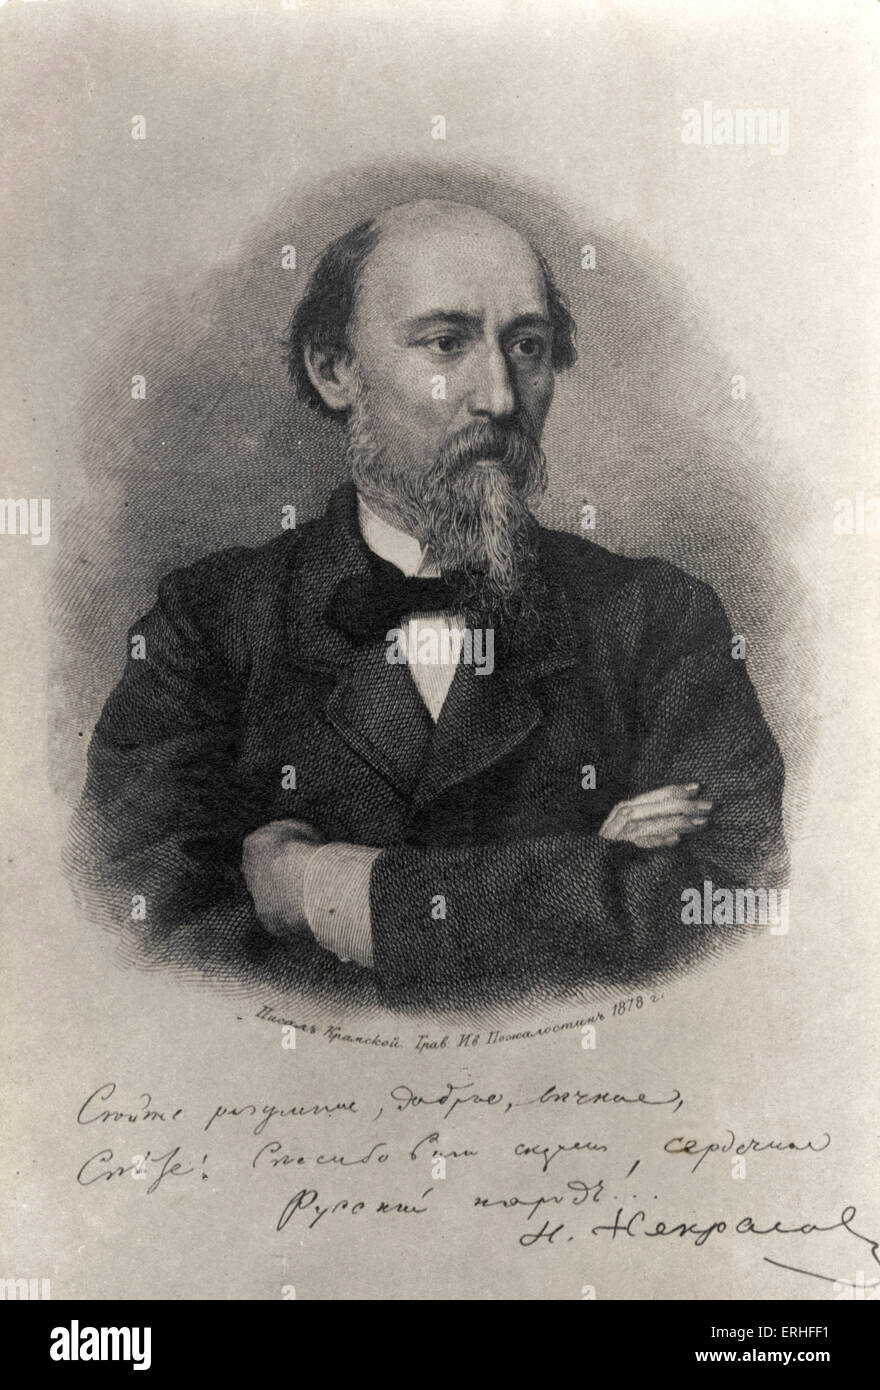 Nikolai Alekseyevich Nekrasov - ritratto - poeta russo 28 Novembre 1821 - 8 Gennaio 1878 Foto Stock